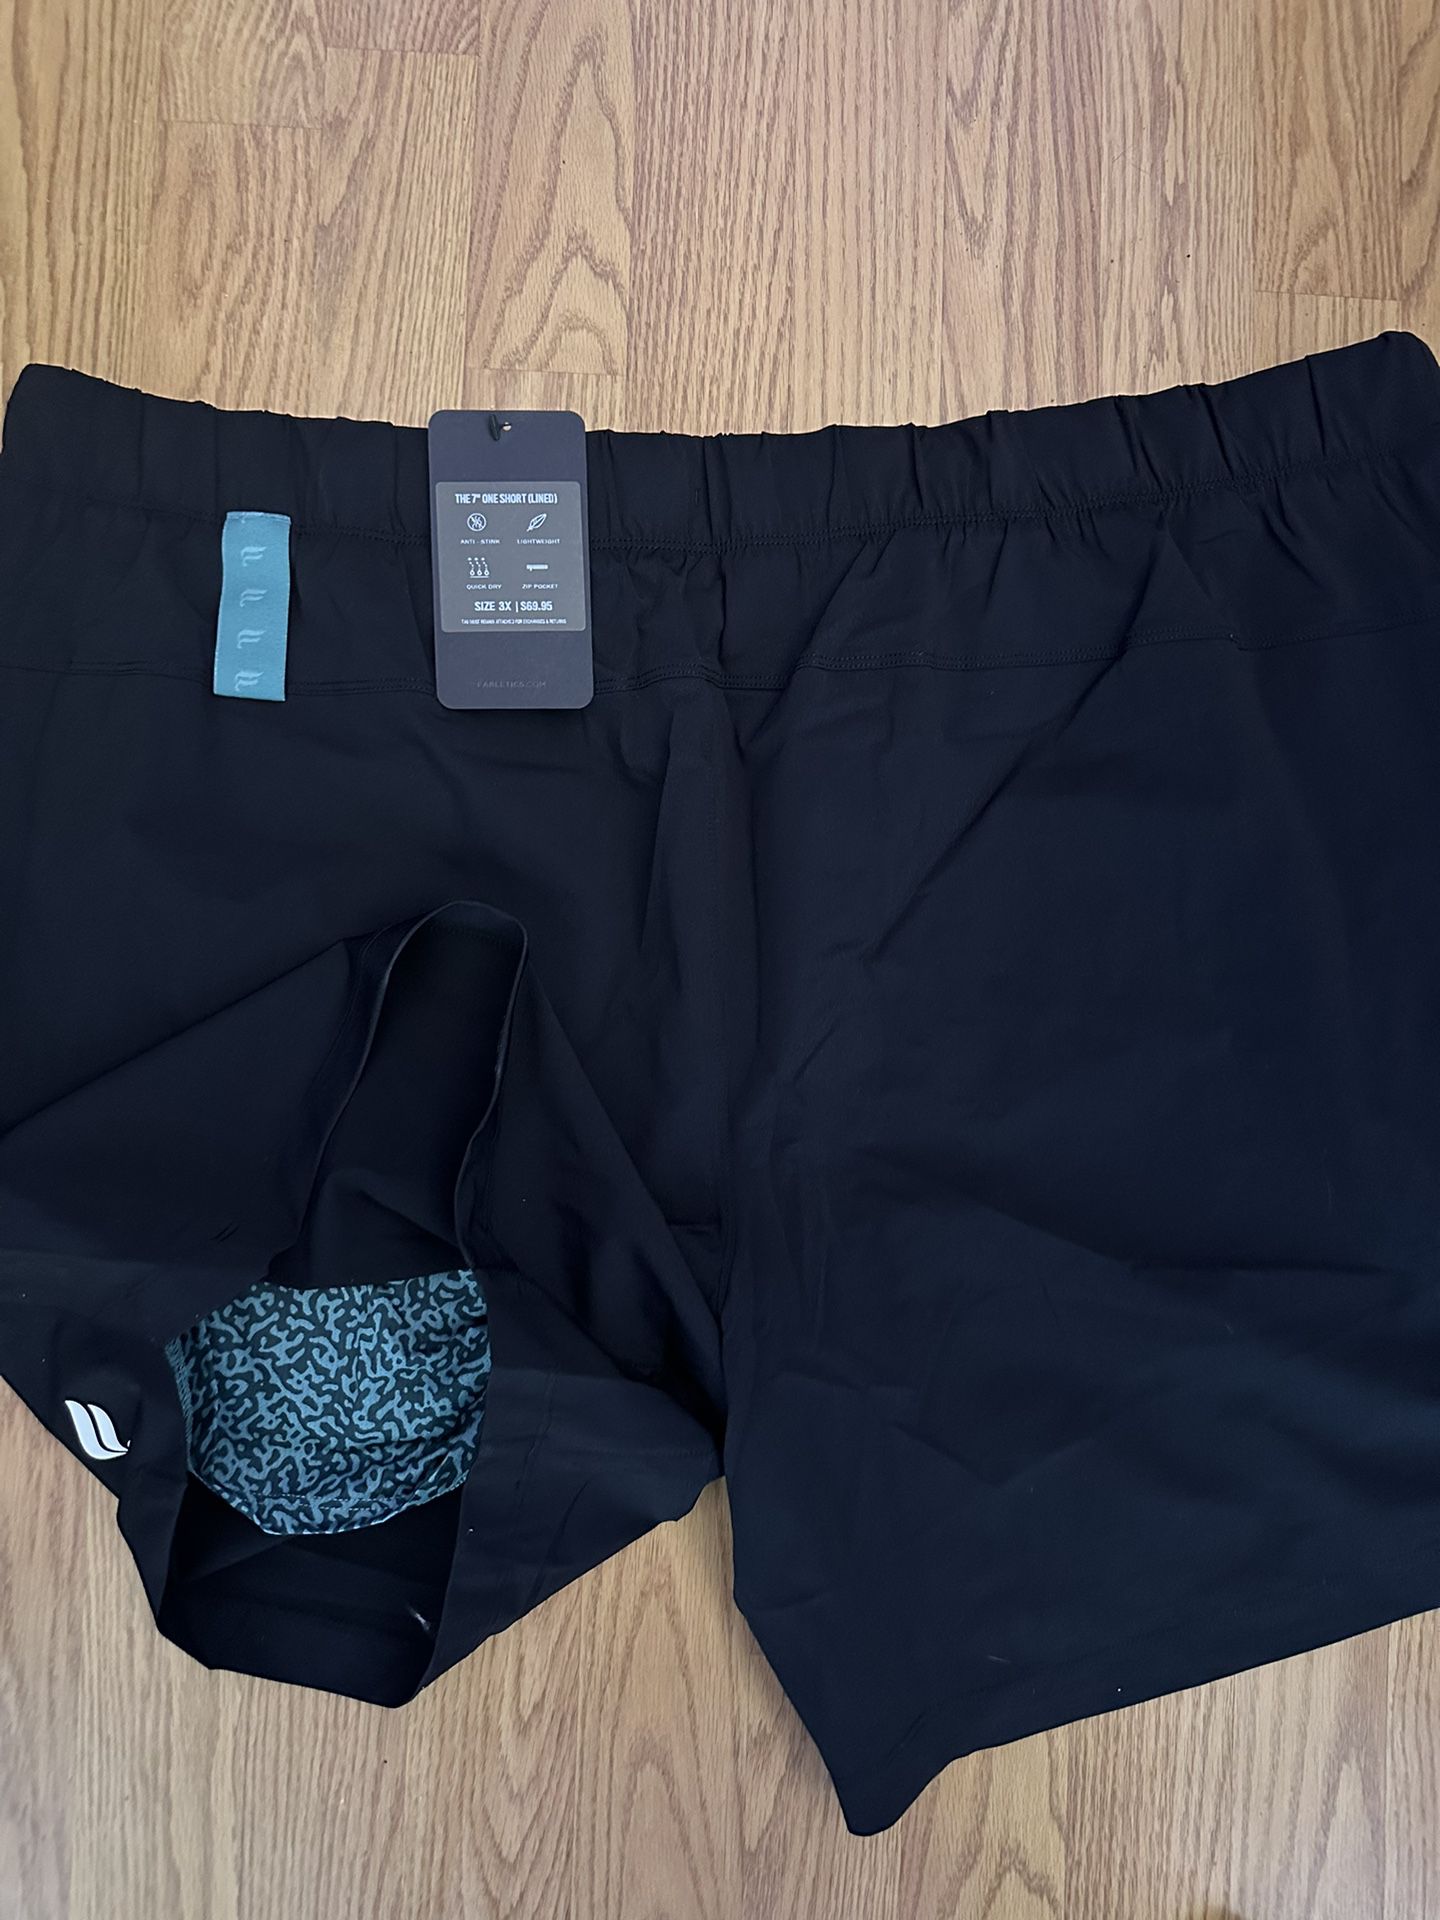 Fabletics Men’s Gym Shorts Size 3XL W/ 7inch Inseam